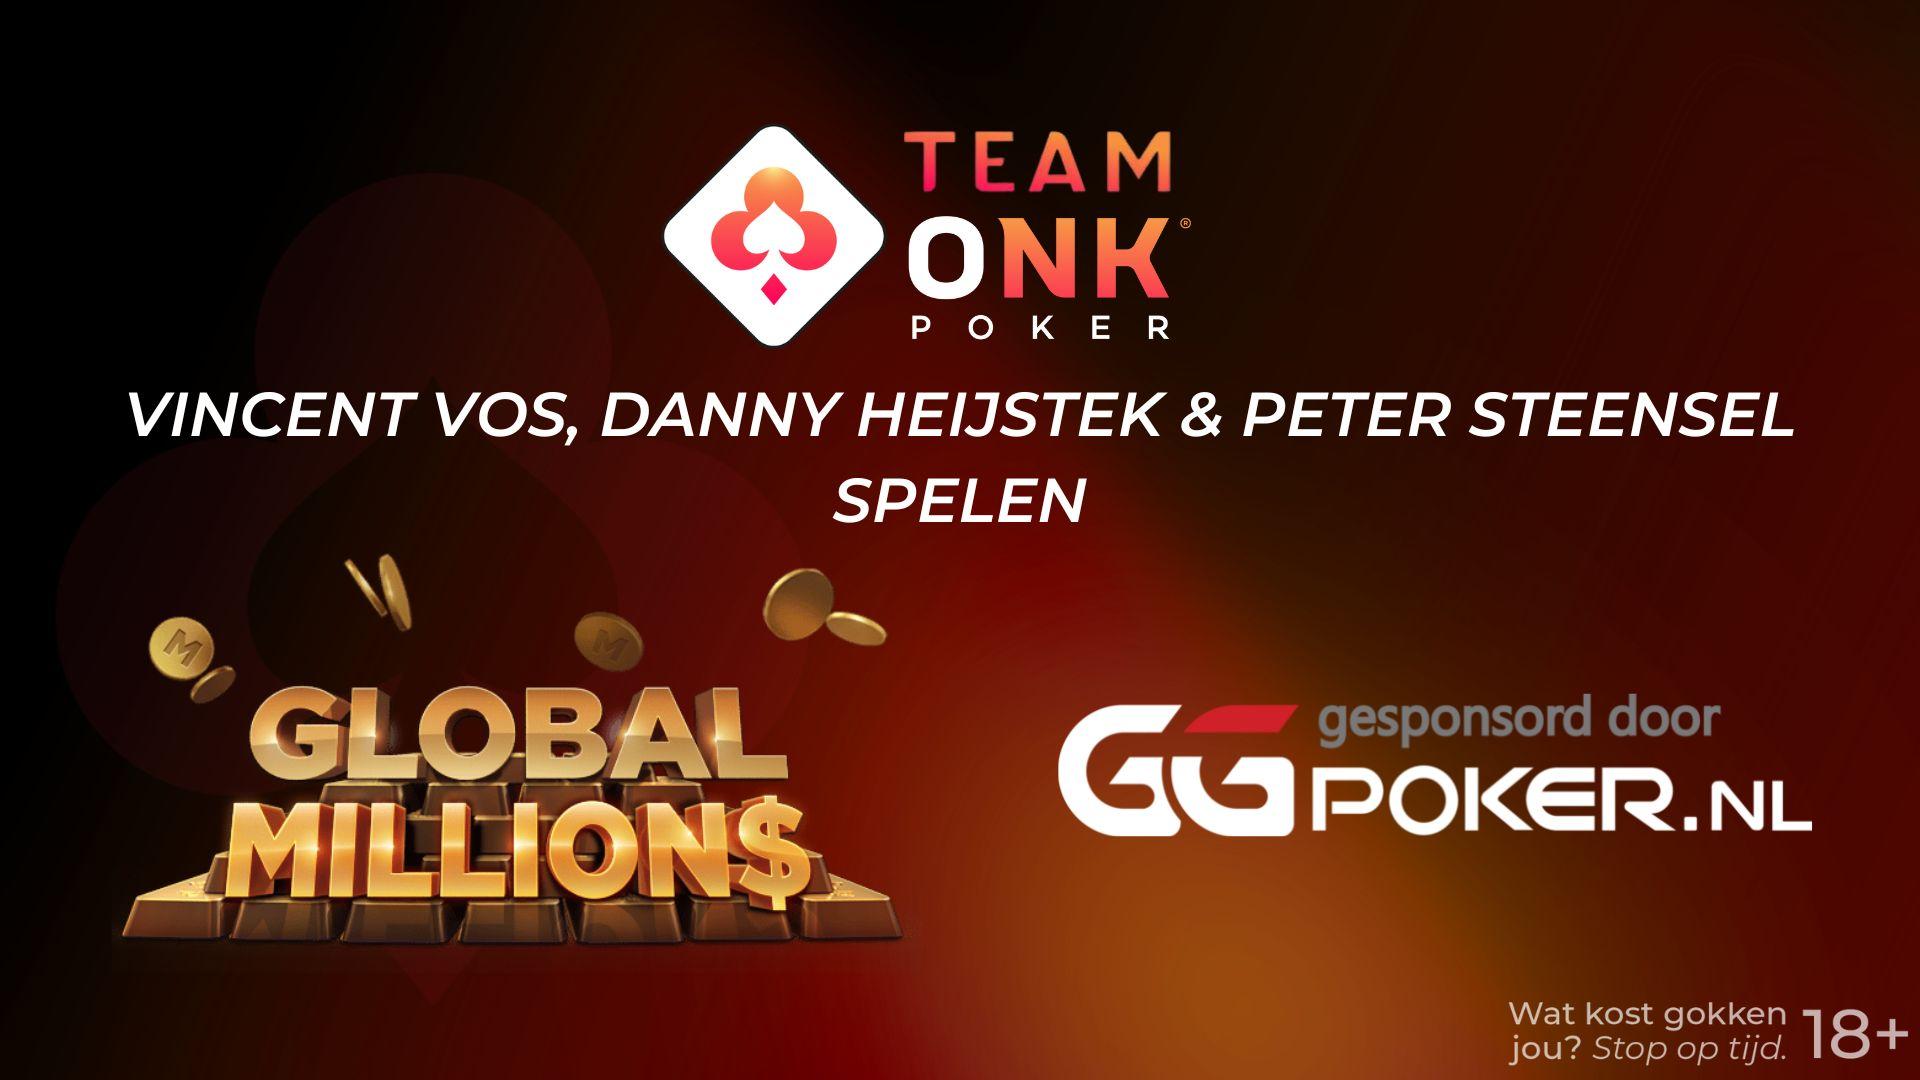 Team ONK Poker speelt Global Million$ gesponsord door GGPoker.nl